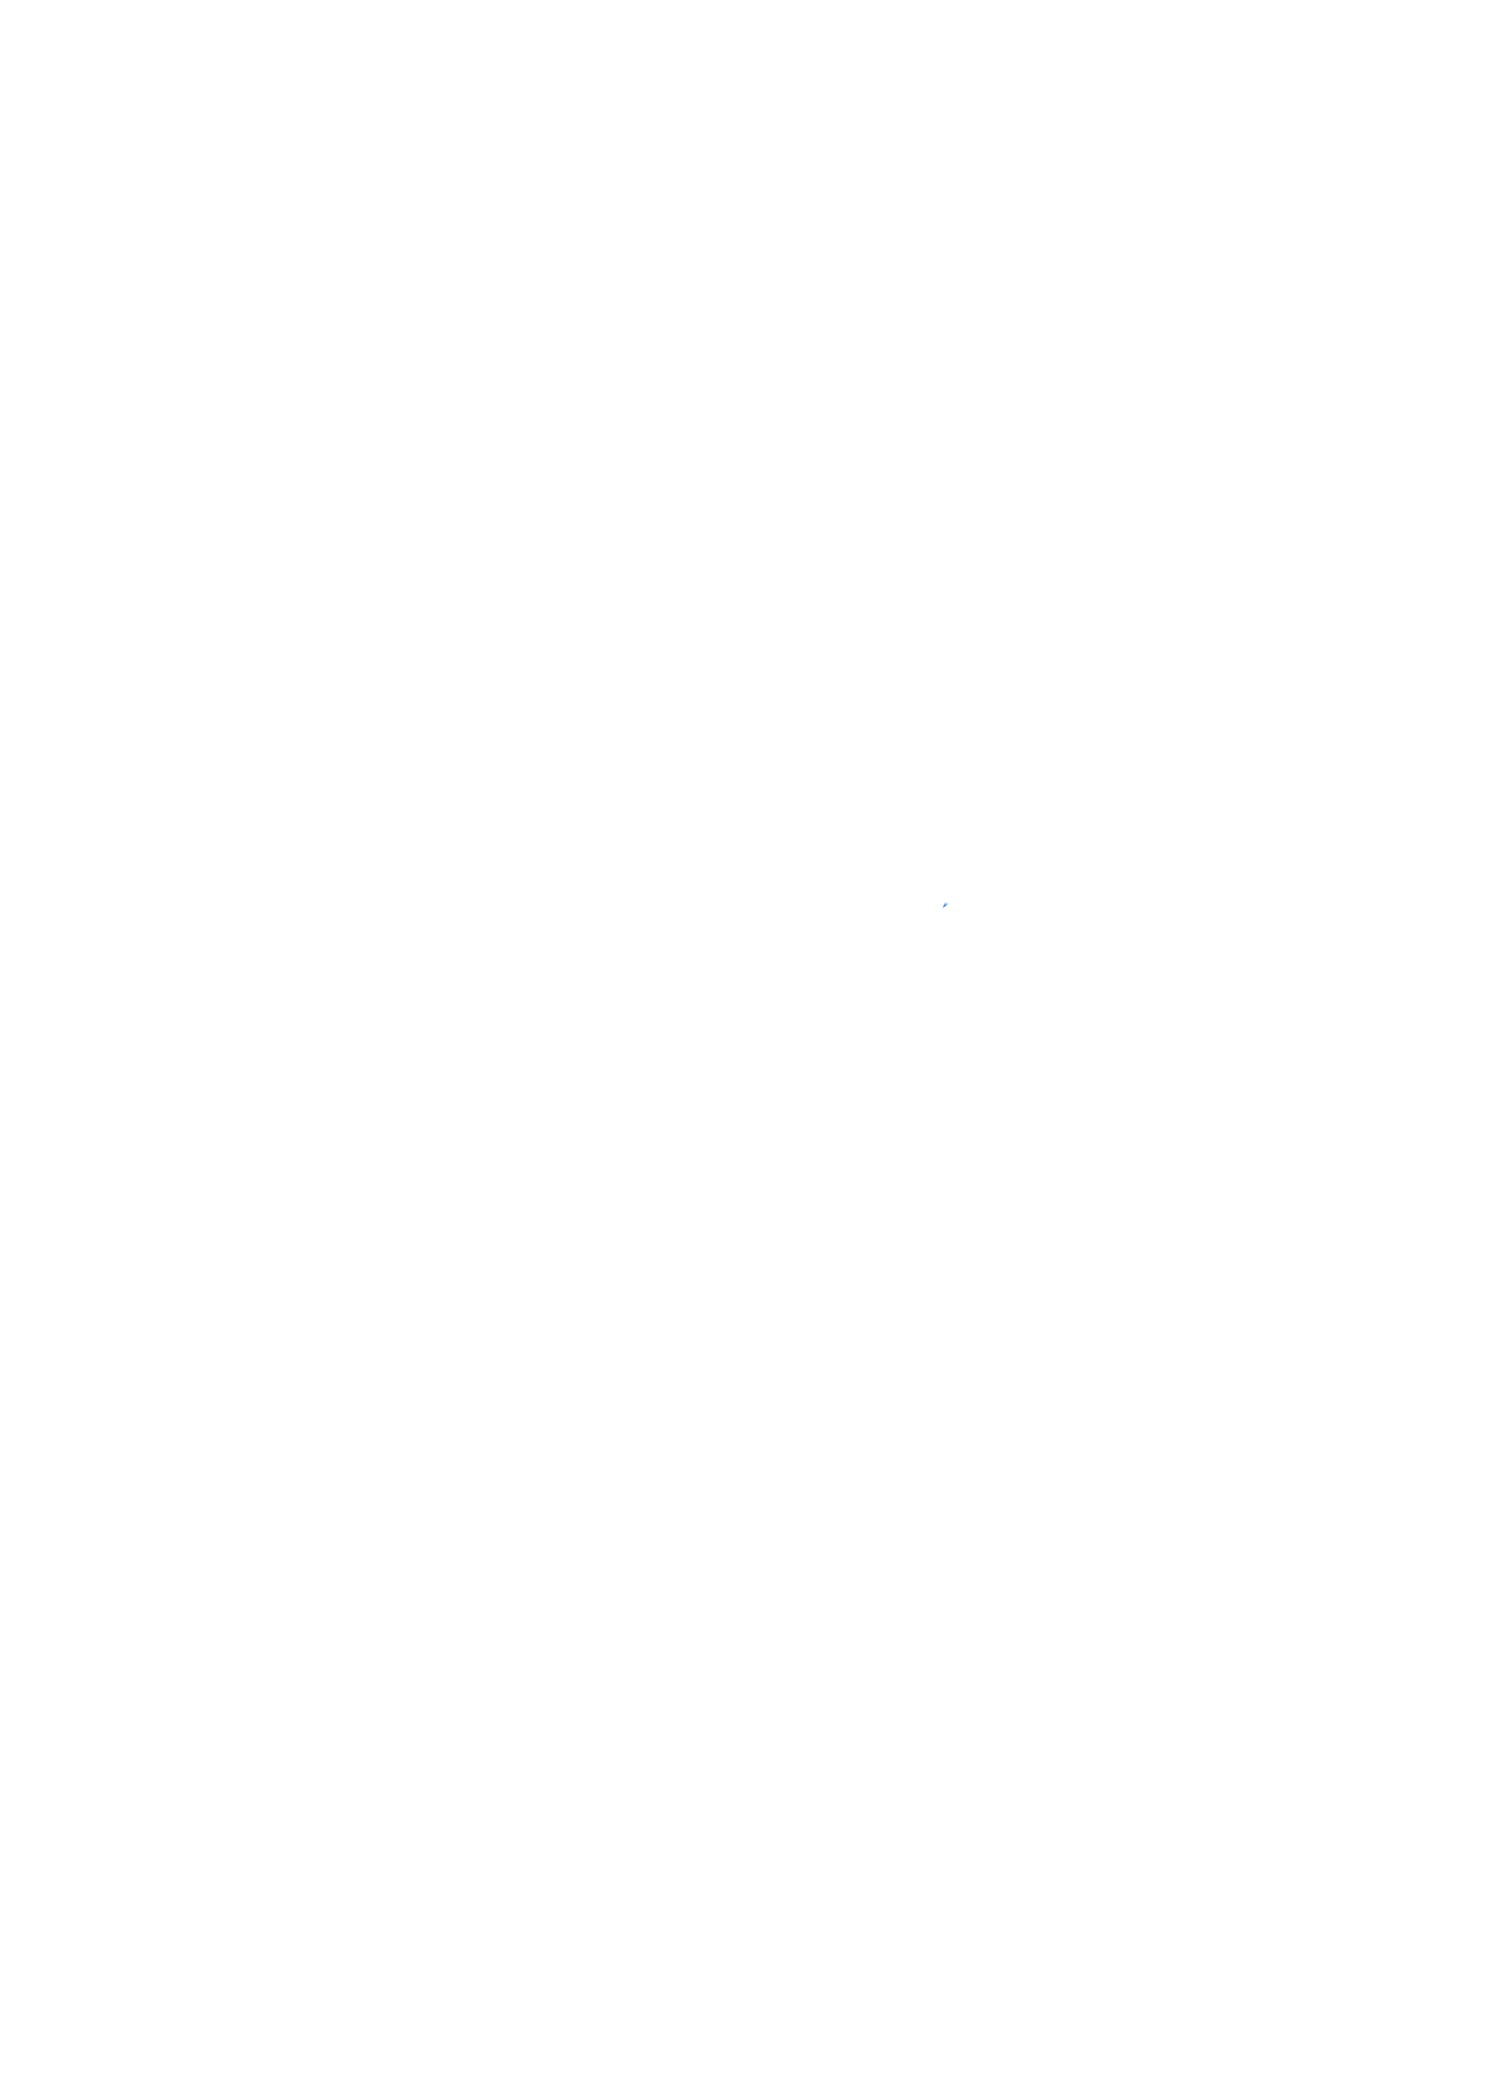 make a wish logo